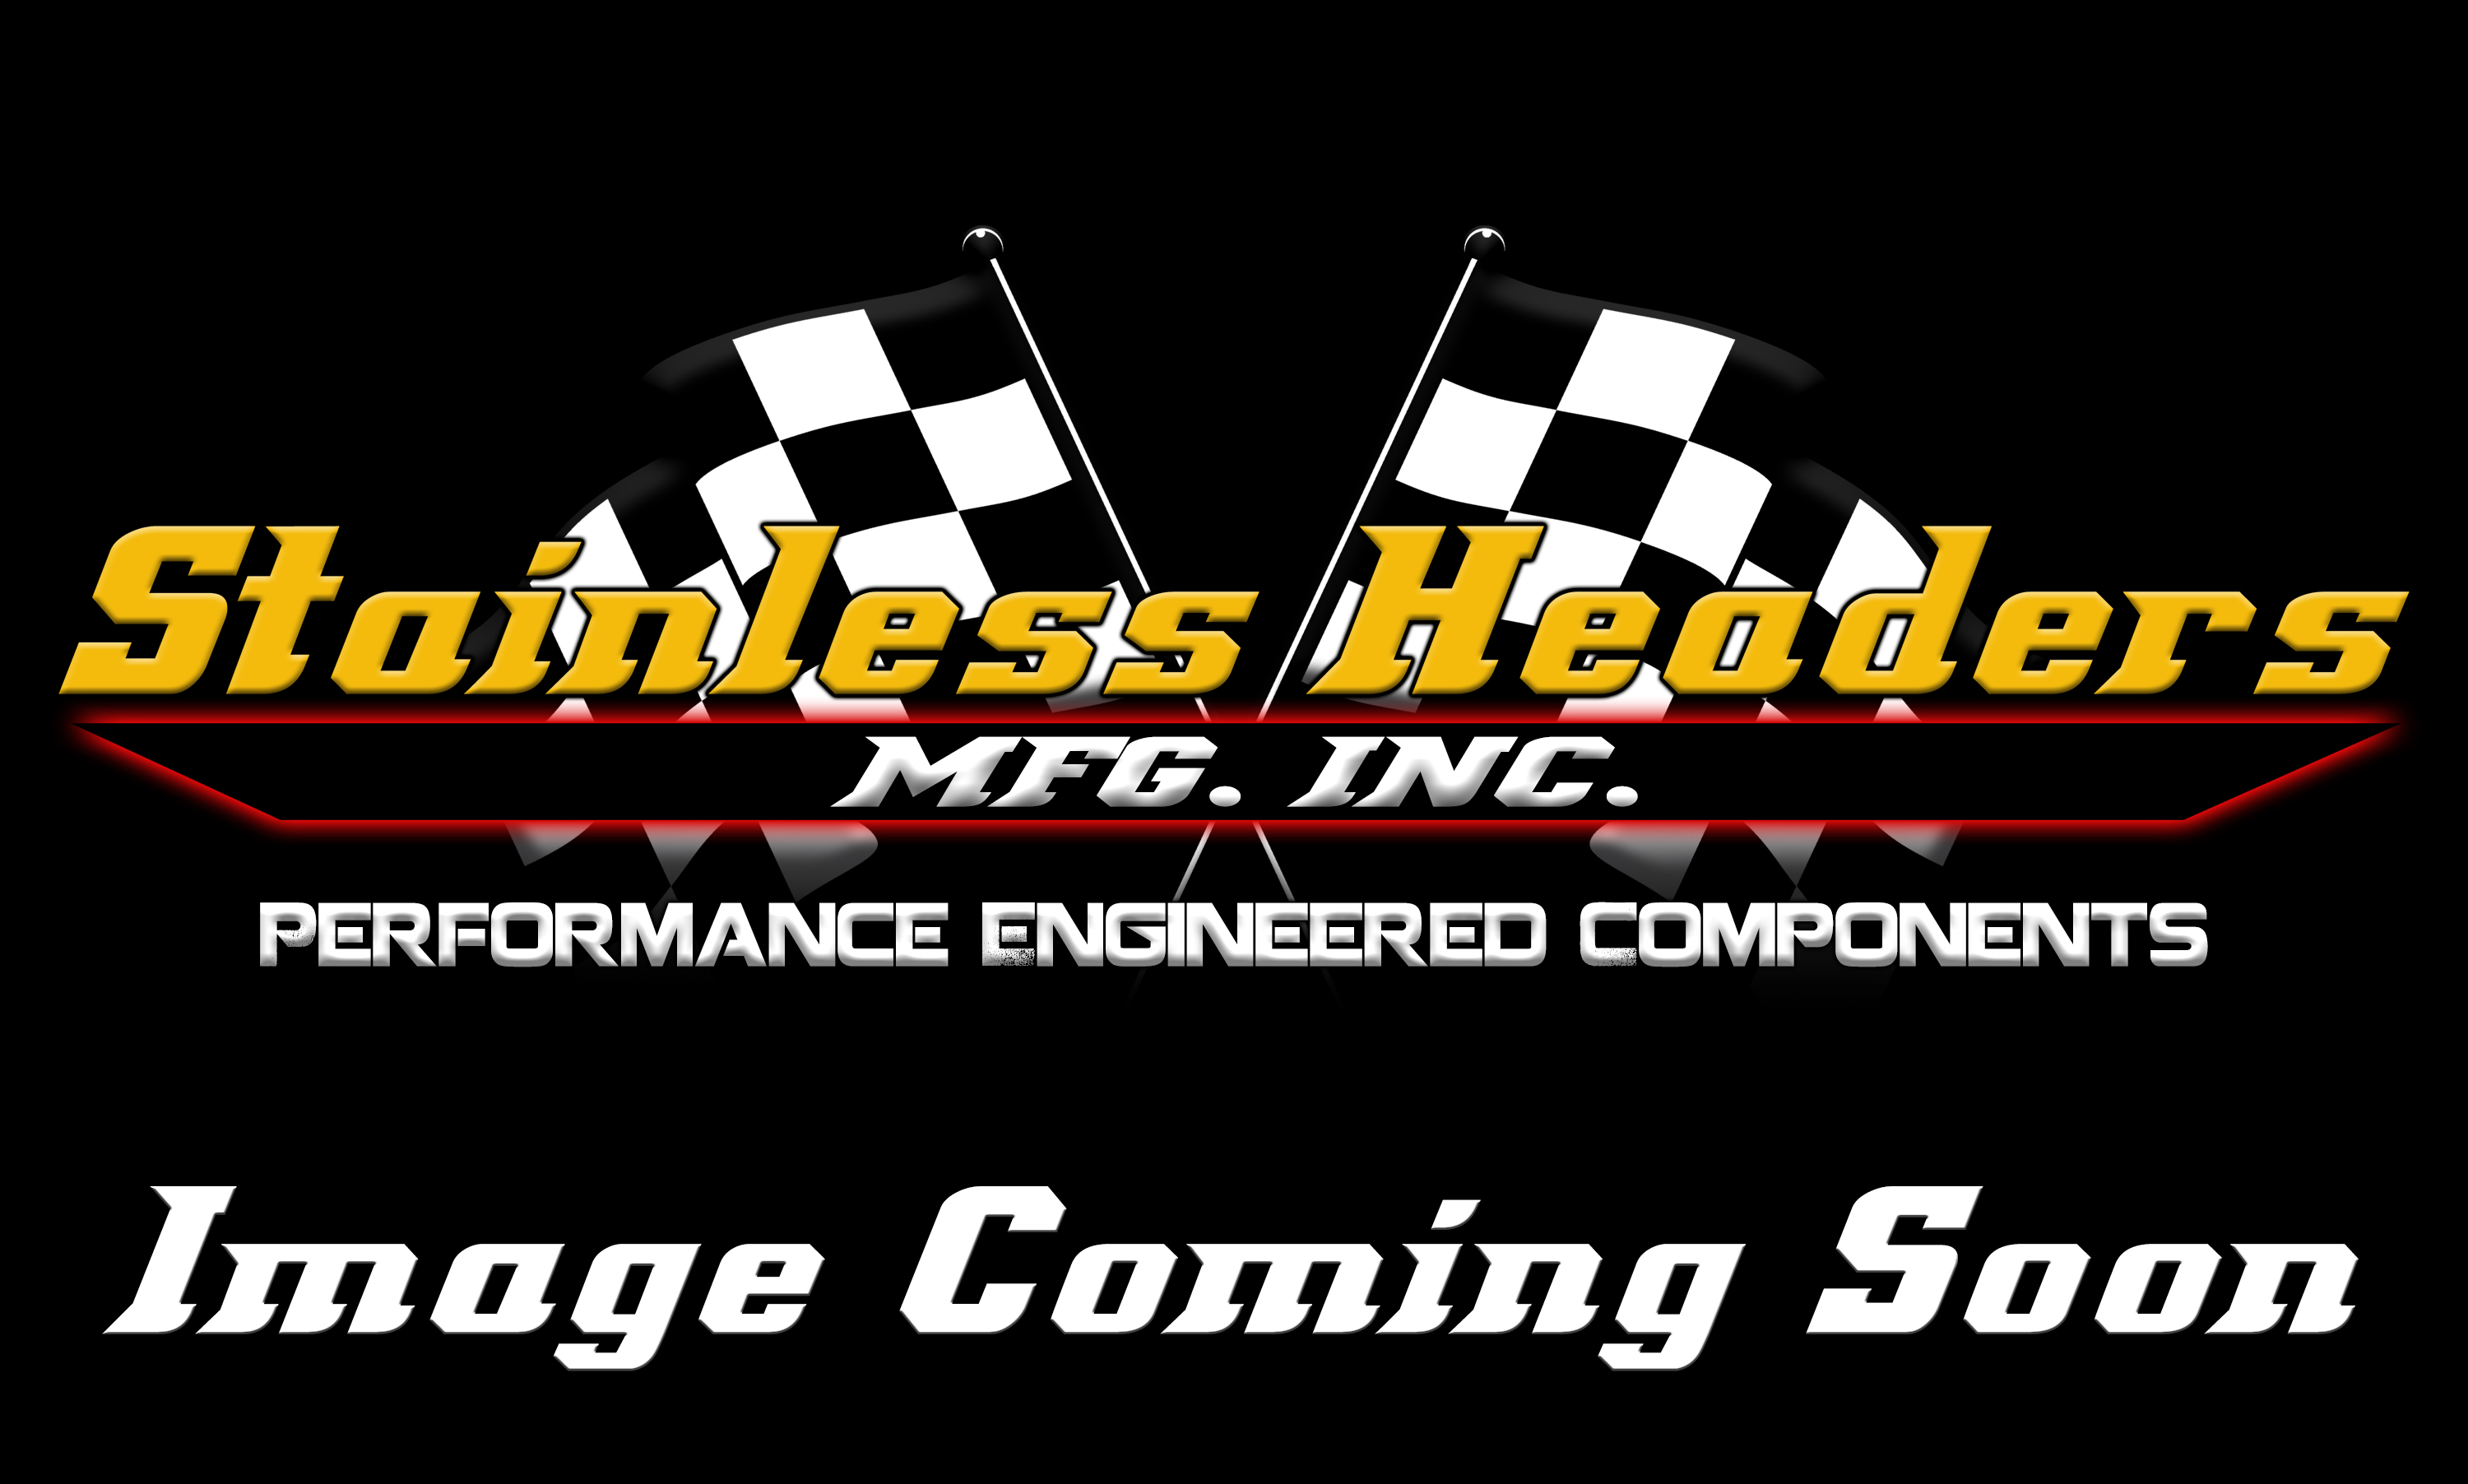 Header Flanges - Mild Steel Header Flanges - Stainless Headers - Brad Anderson BA 6x/8x Mild Steel Header Flange